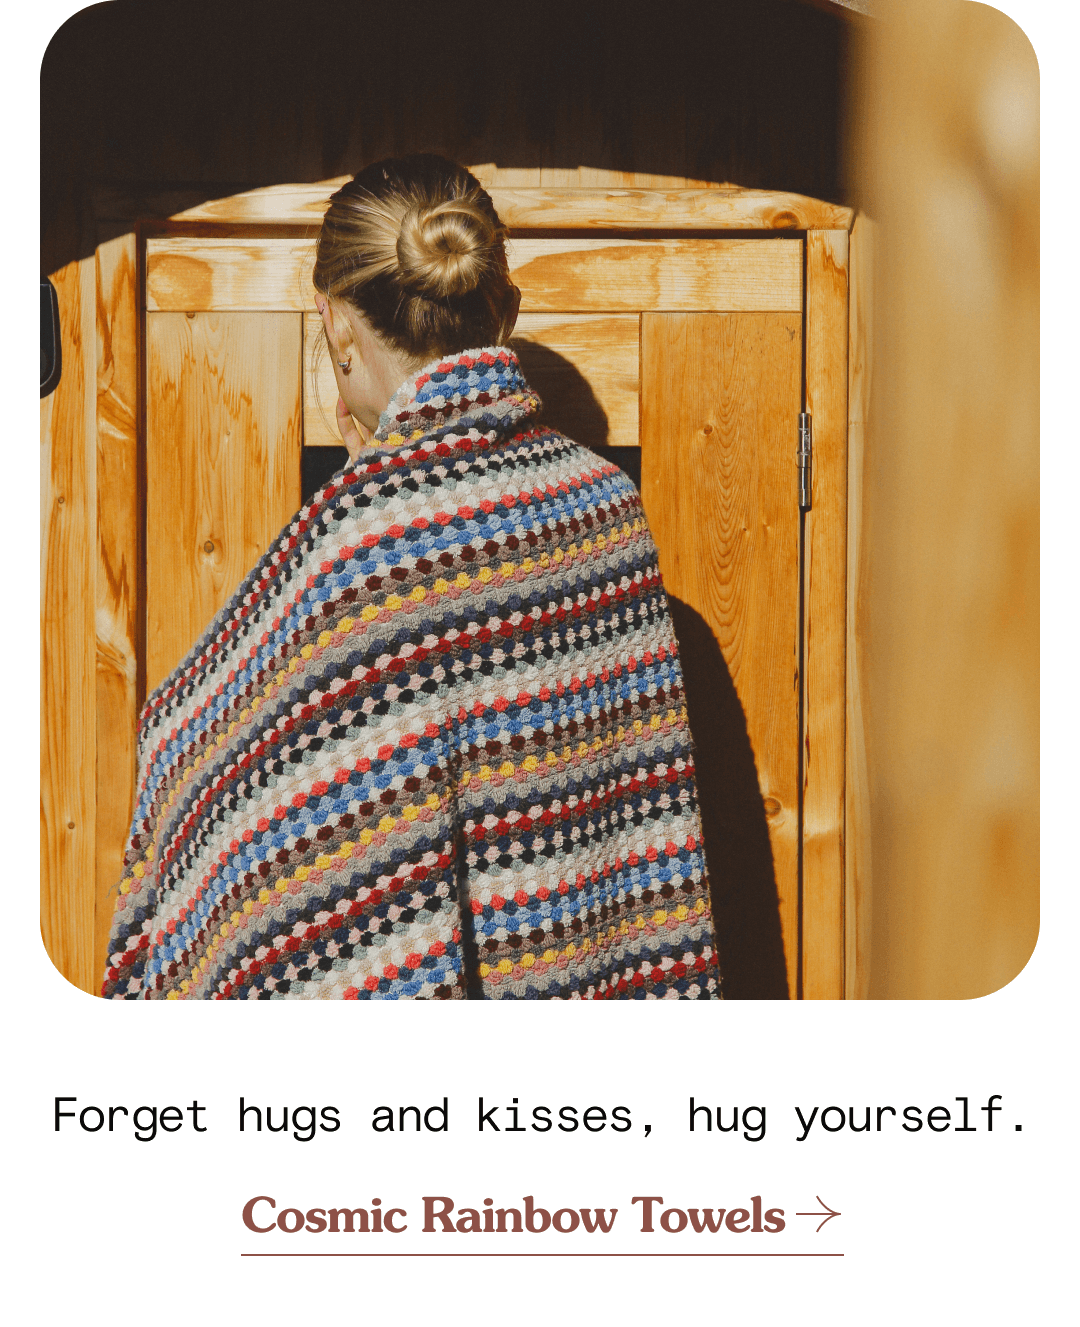 Forget hugs and kisses, hug yourself. Cosmic Rainbow Towels